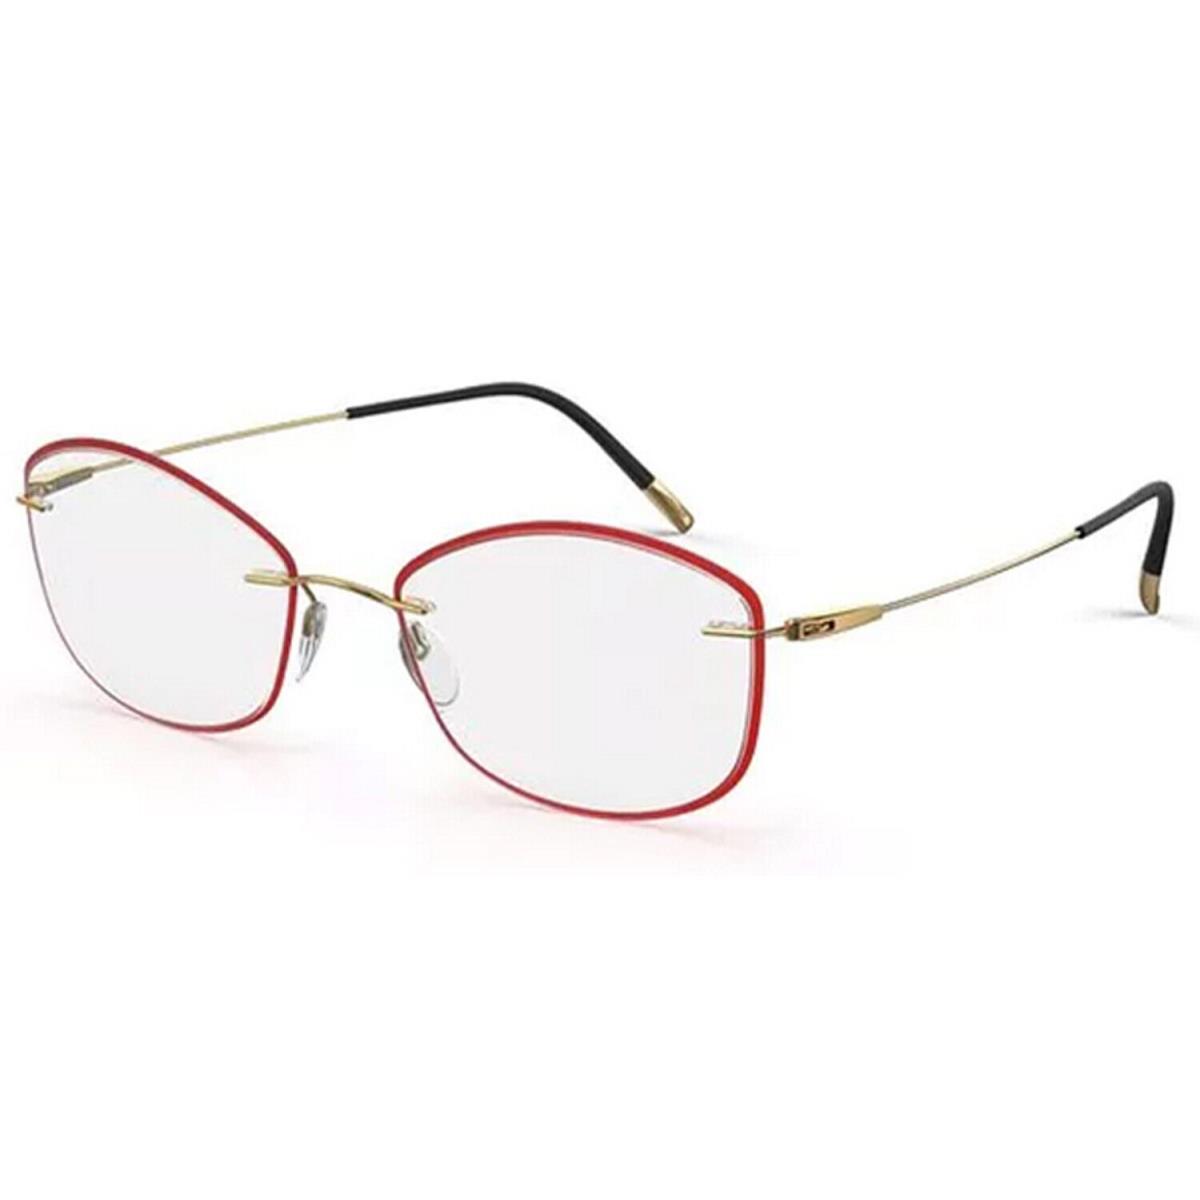 Silhouette Eyeglasses Dynamics Colorwave 54/17/135 Gold Cherry 5500/JB-7830